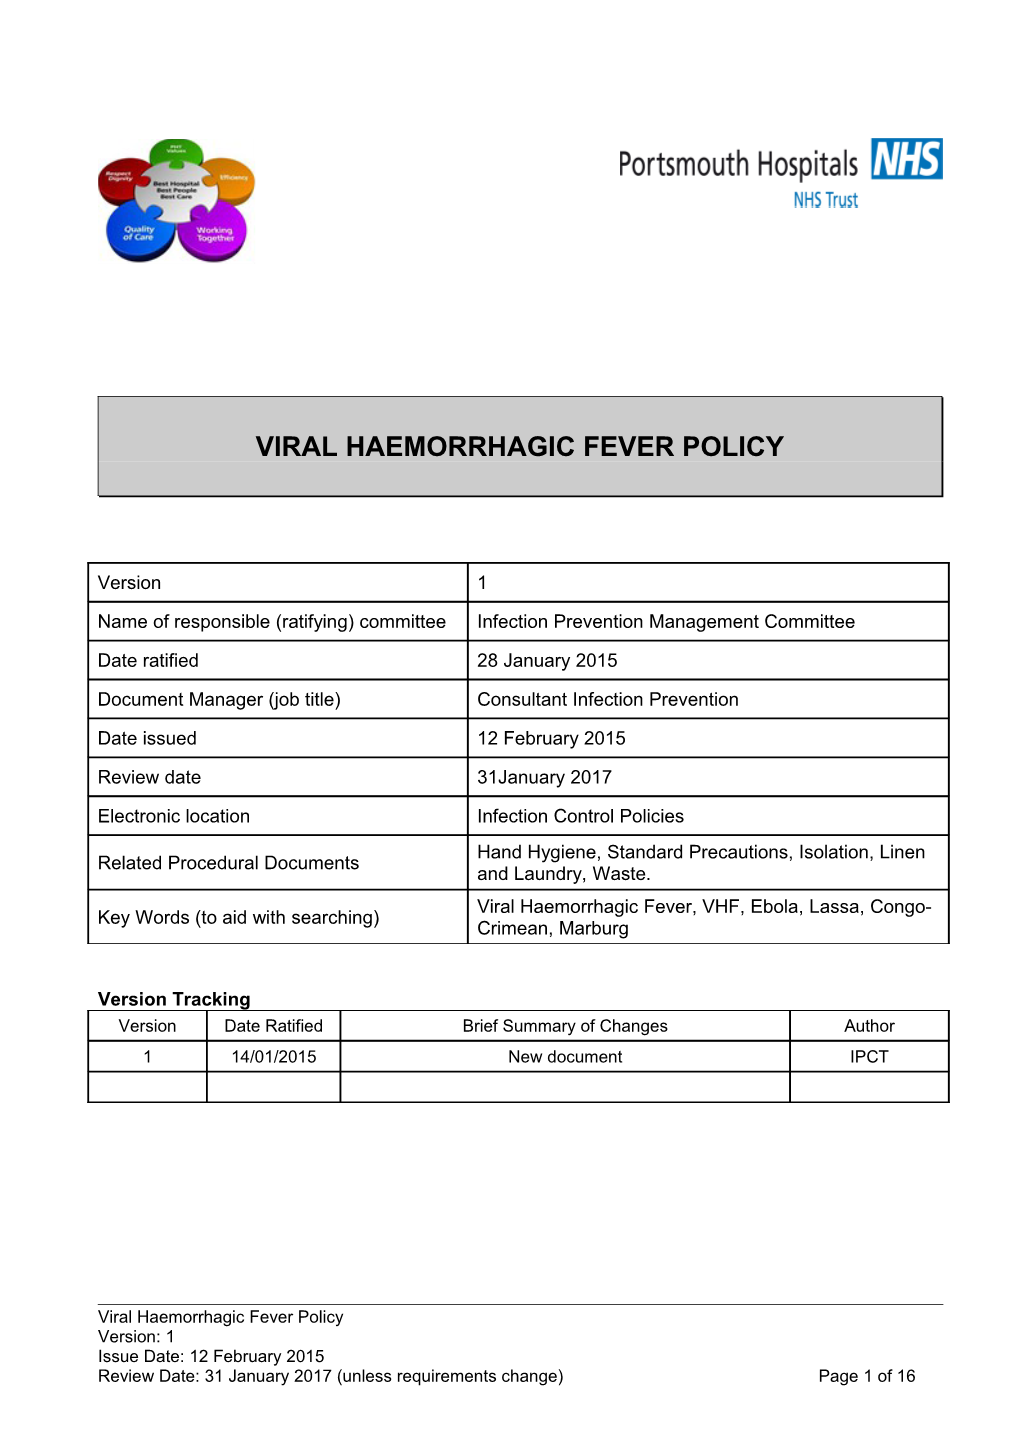 Viral Haemorrhagic Fever Policy